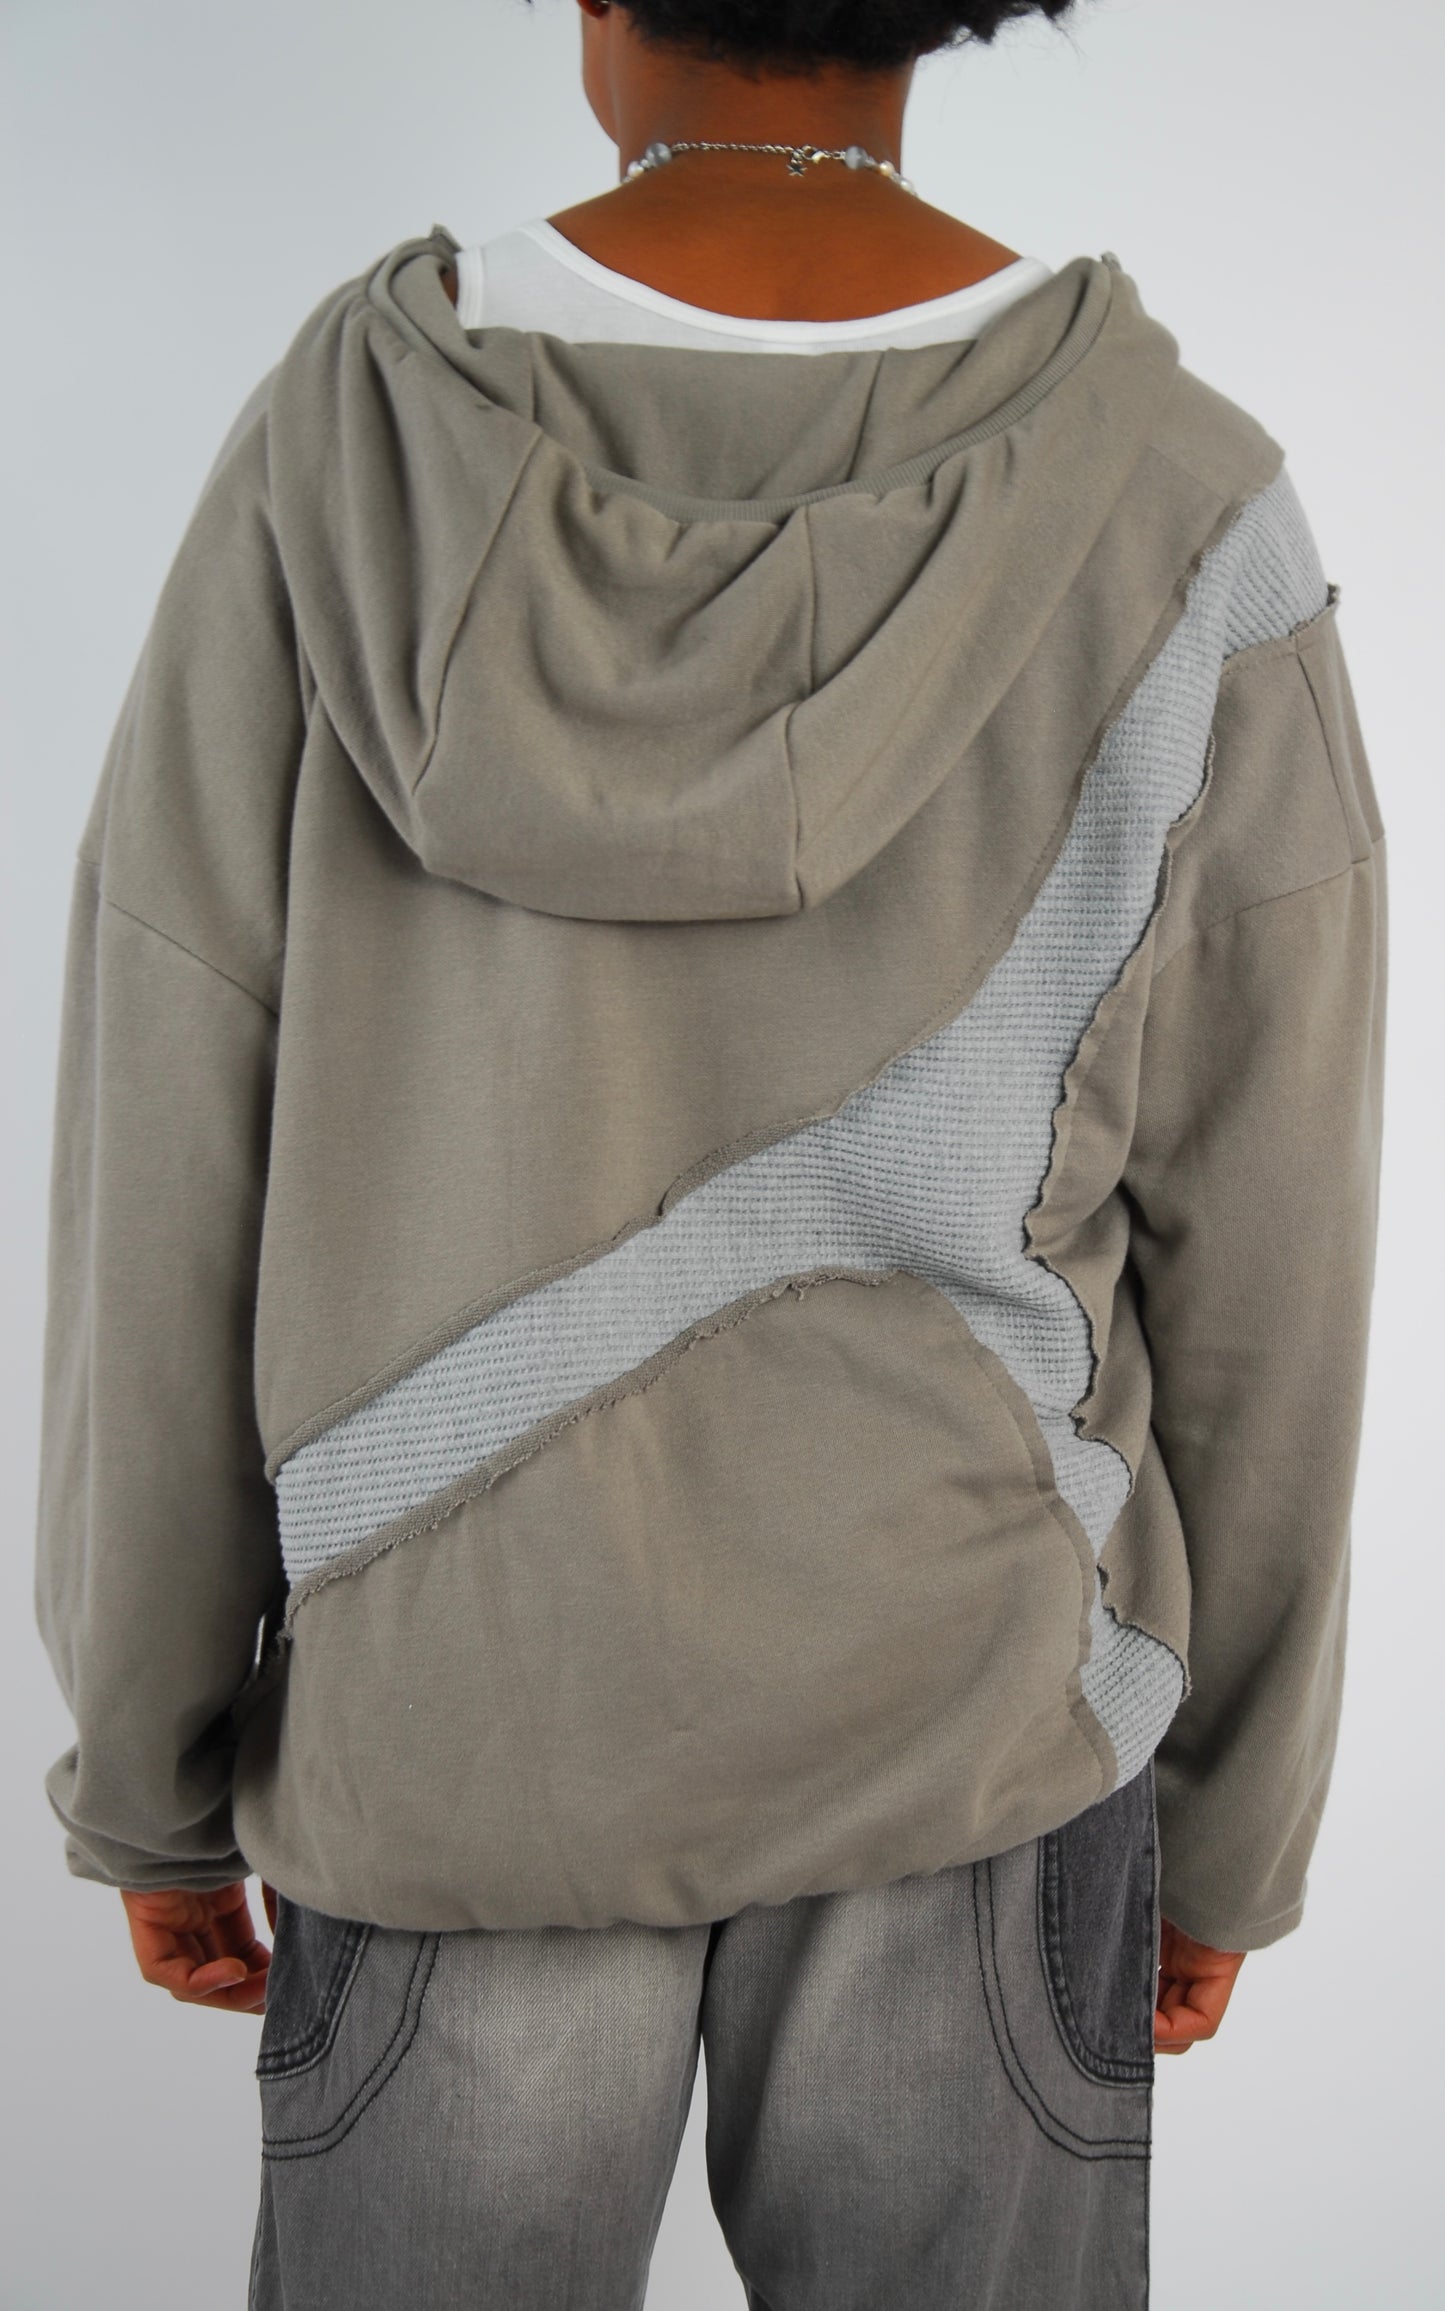 Asymetrical illustration zipper/jacket